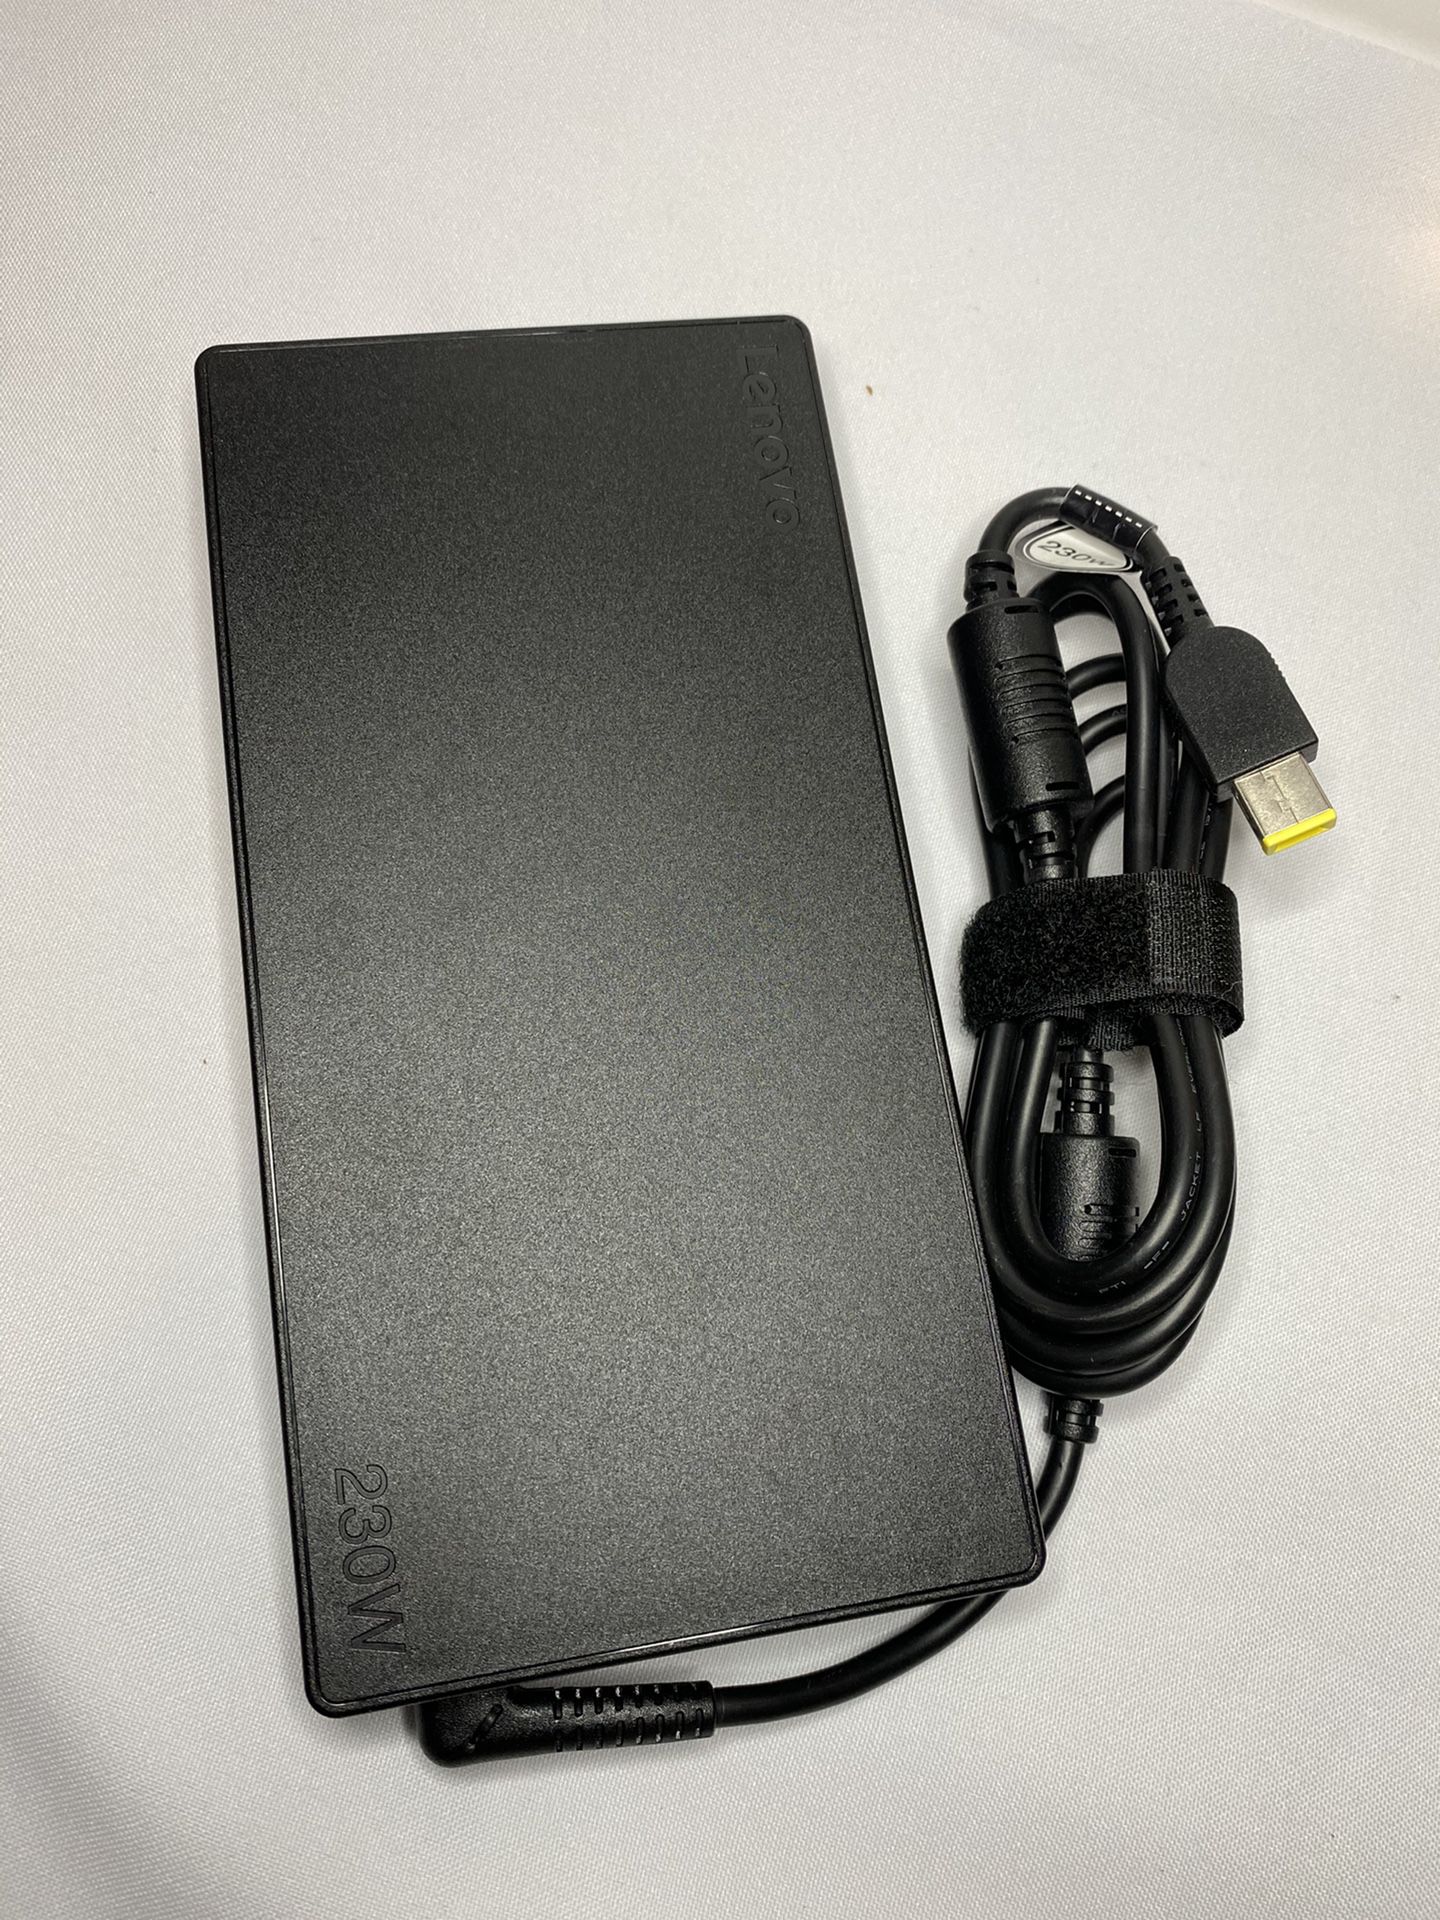 Lenovo ThinkPad 230 W AC Adapter (Slim Tip) For P50 & P70 Model